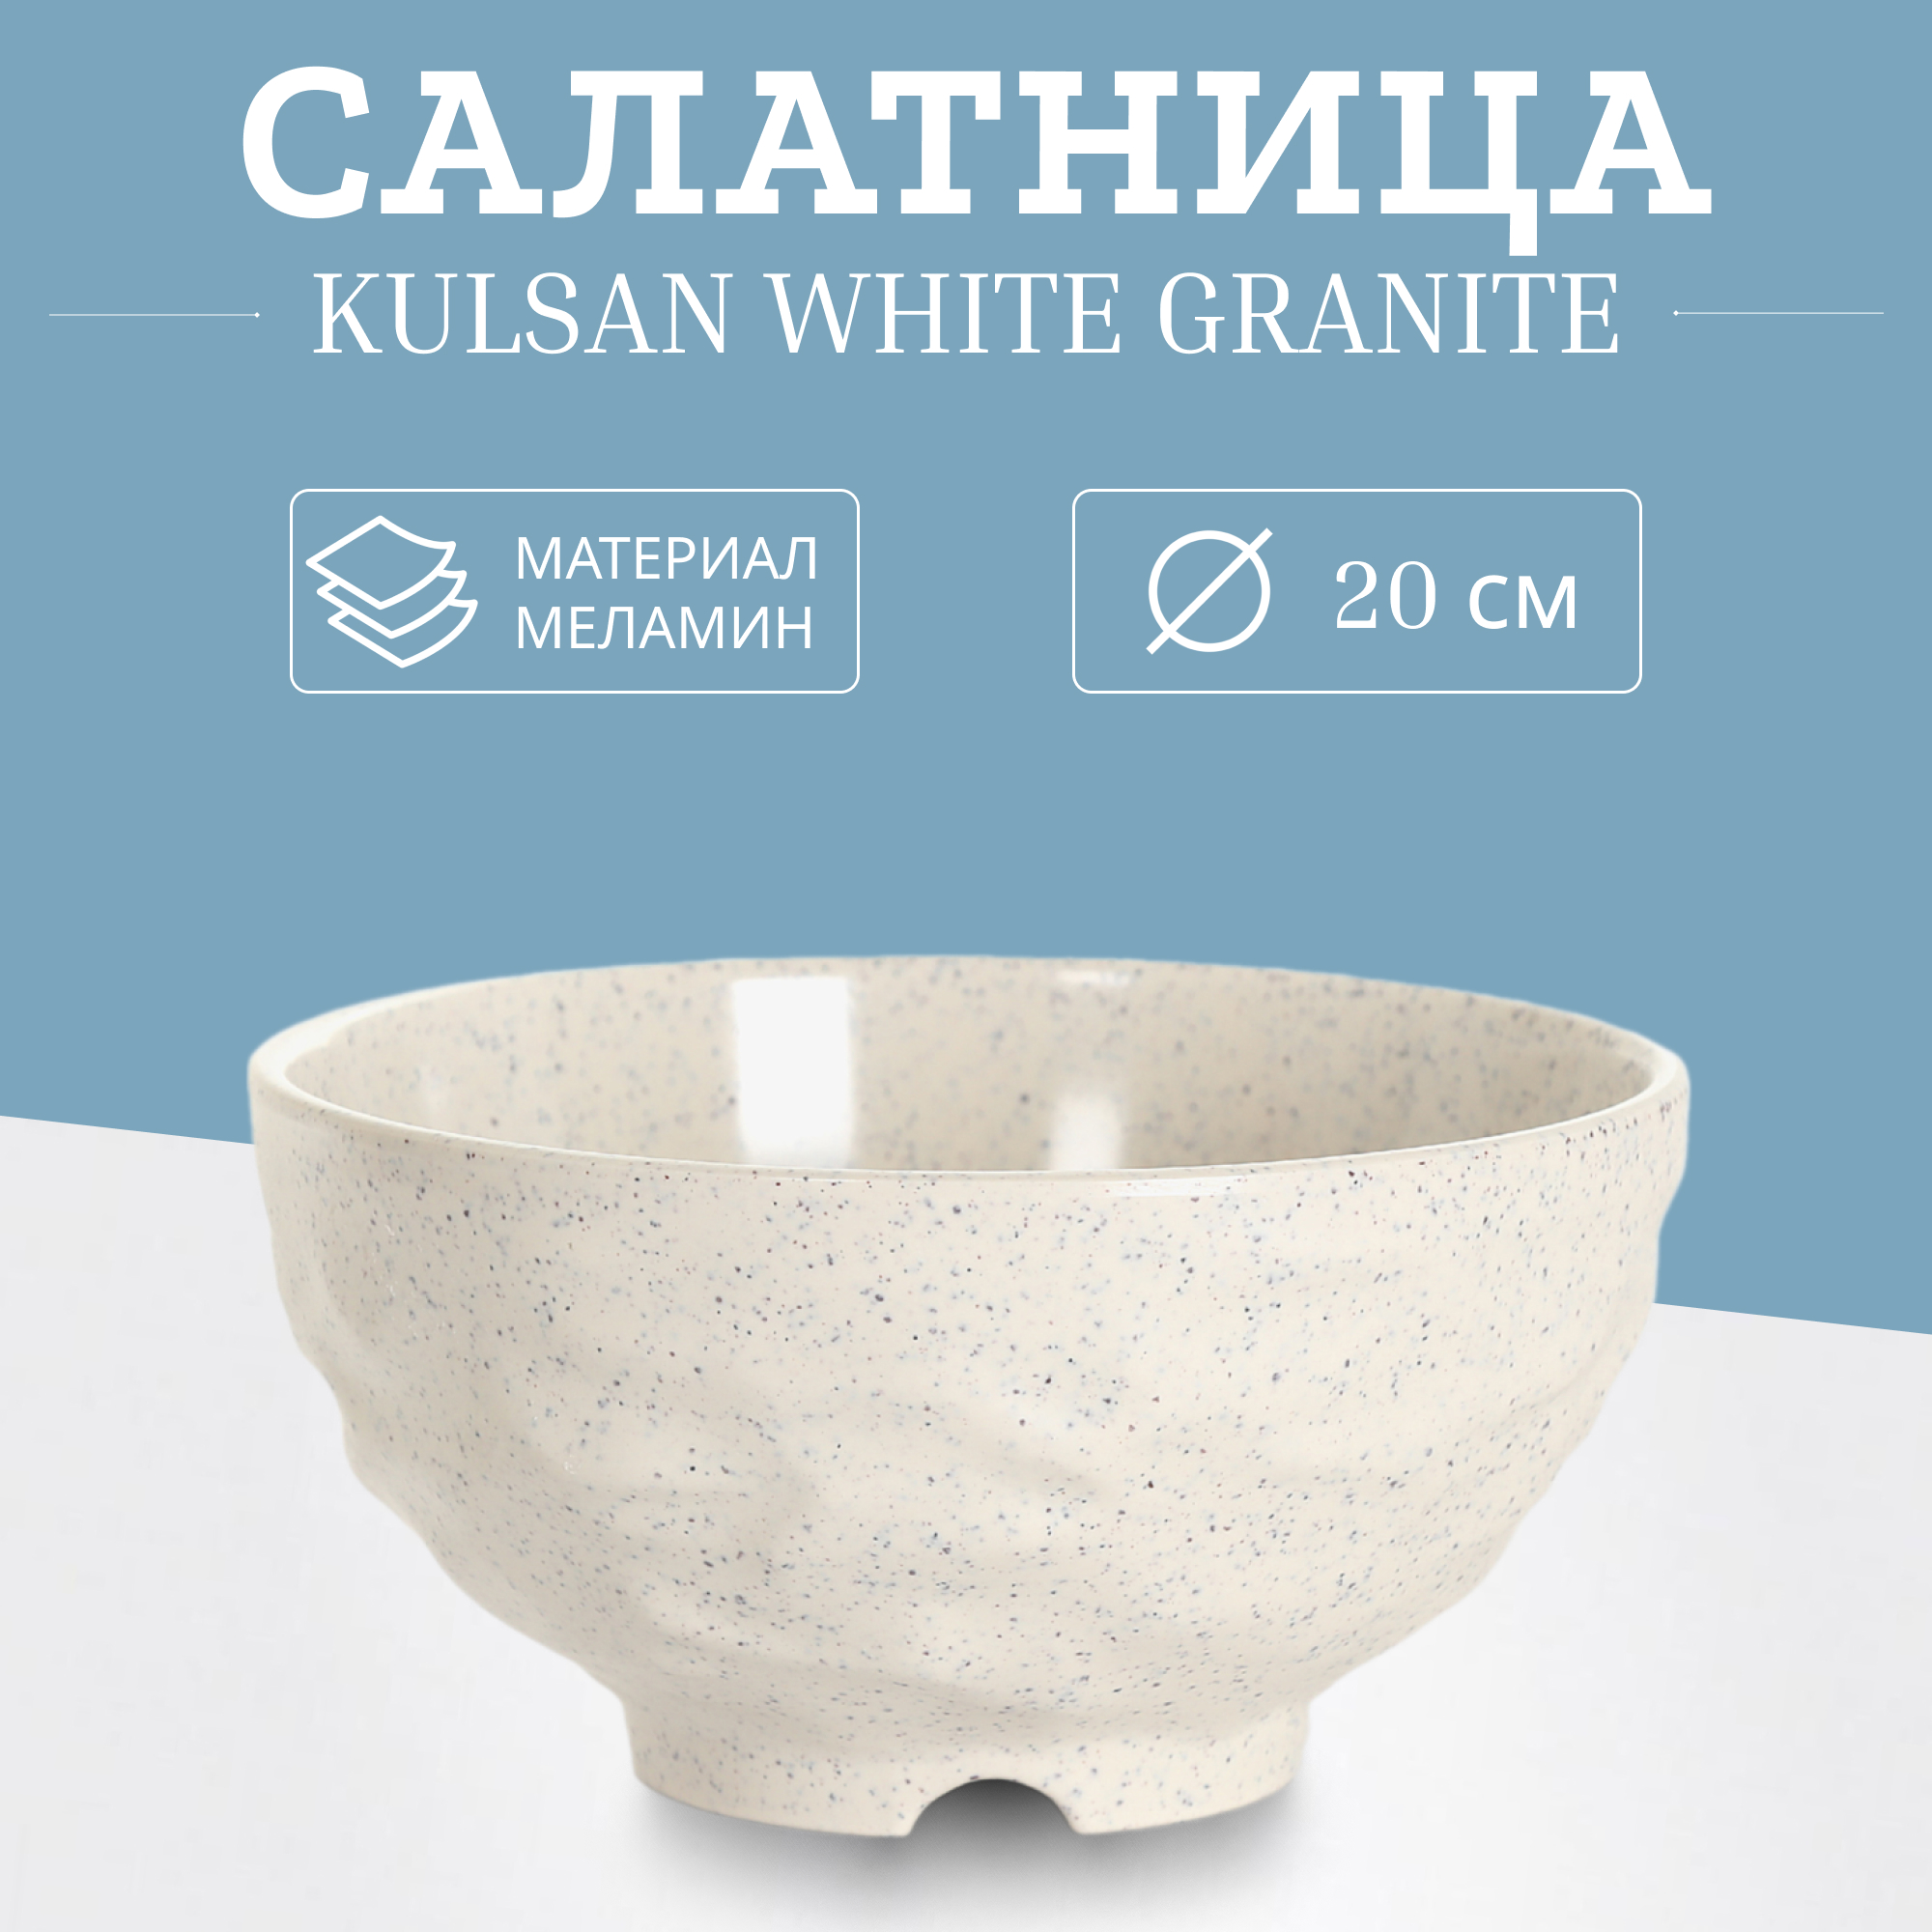 Салатница Kulsan White granite 20 см, цвет слоновая кость - фото 2